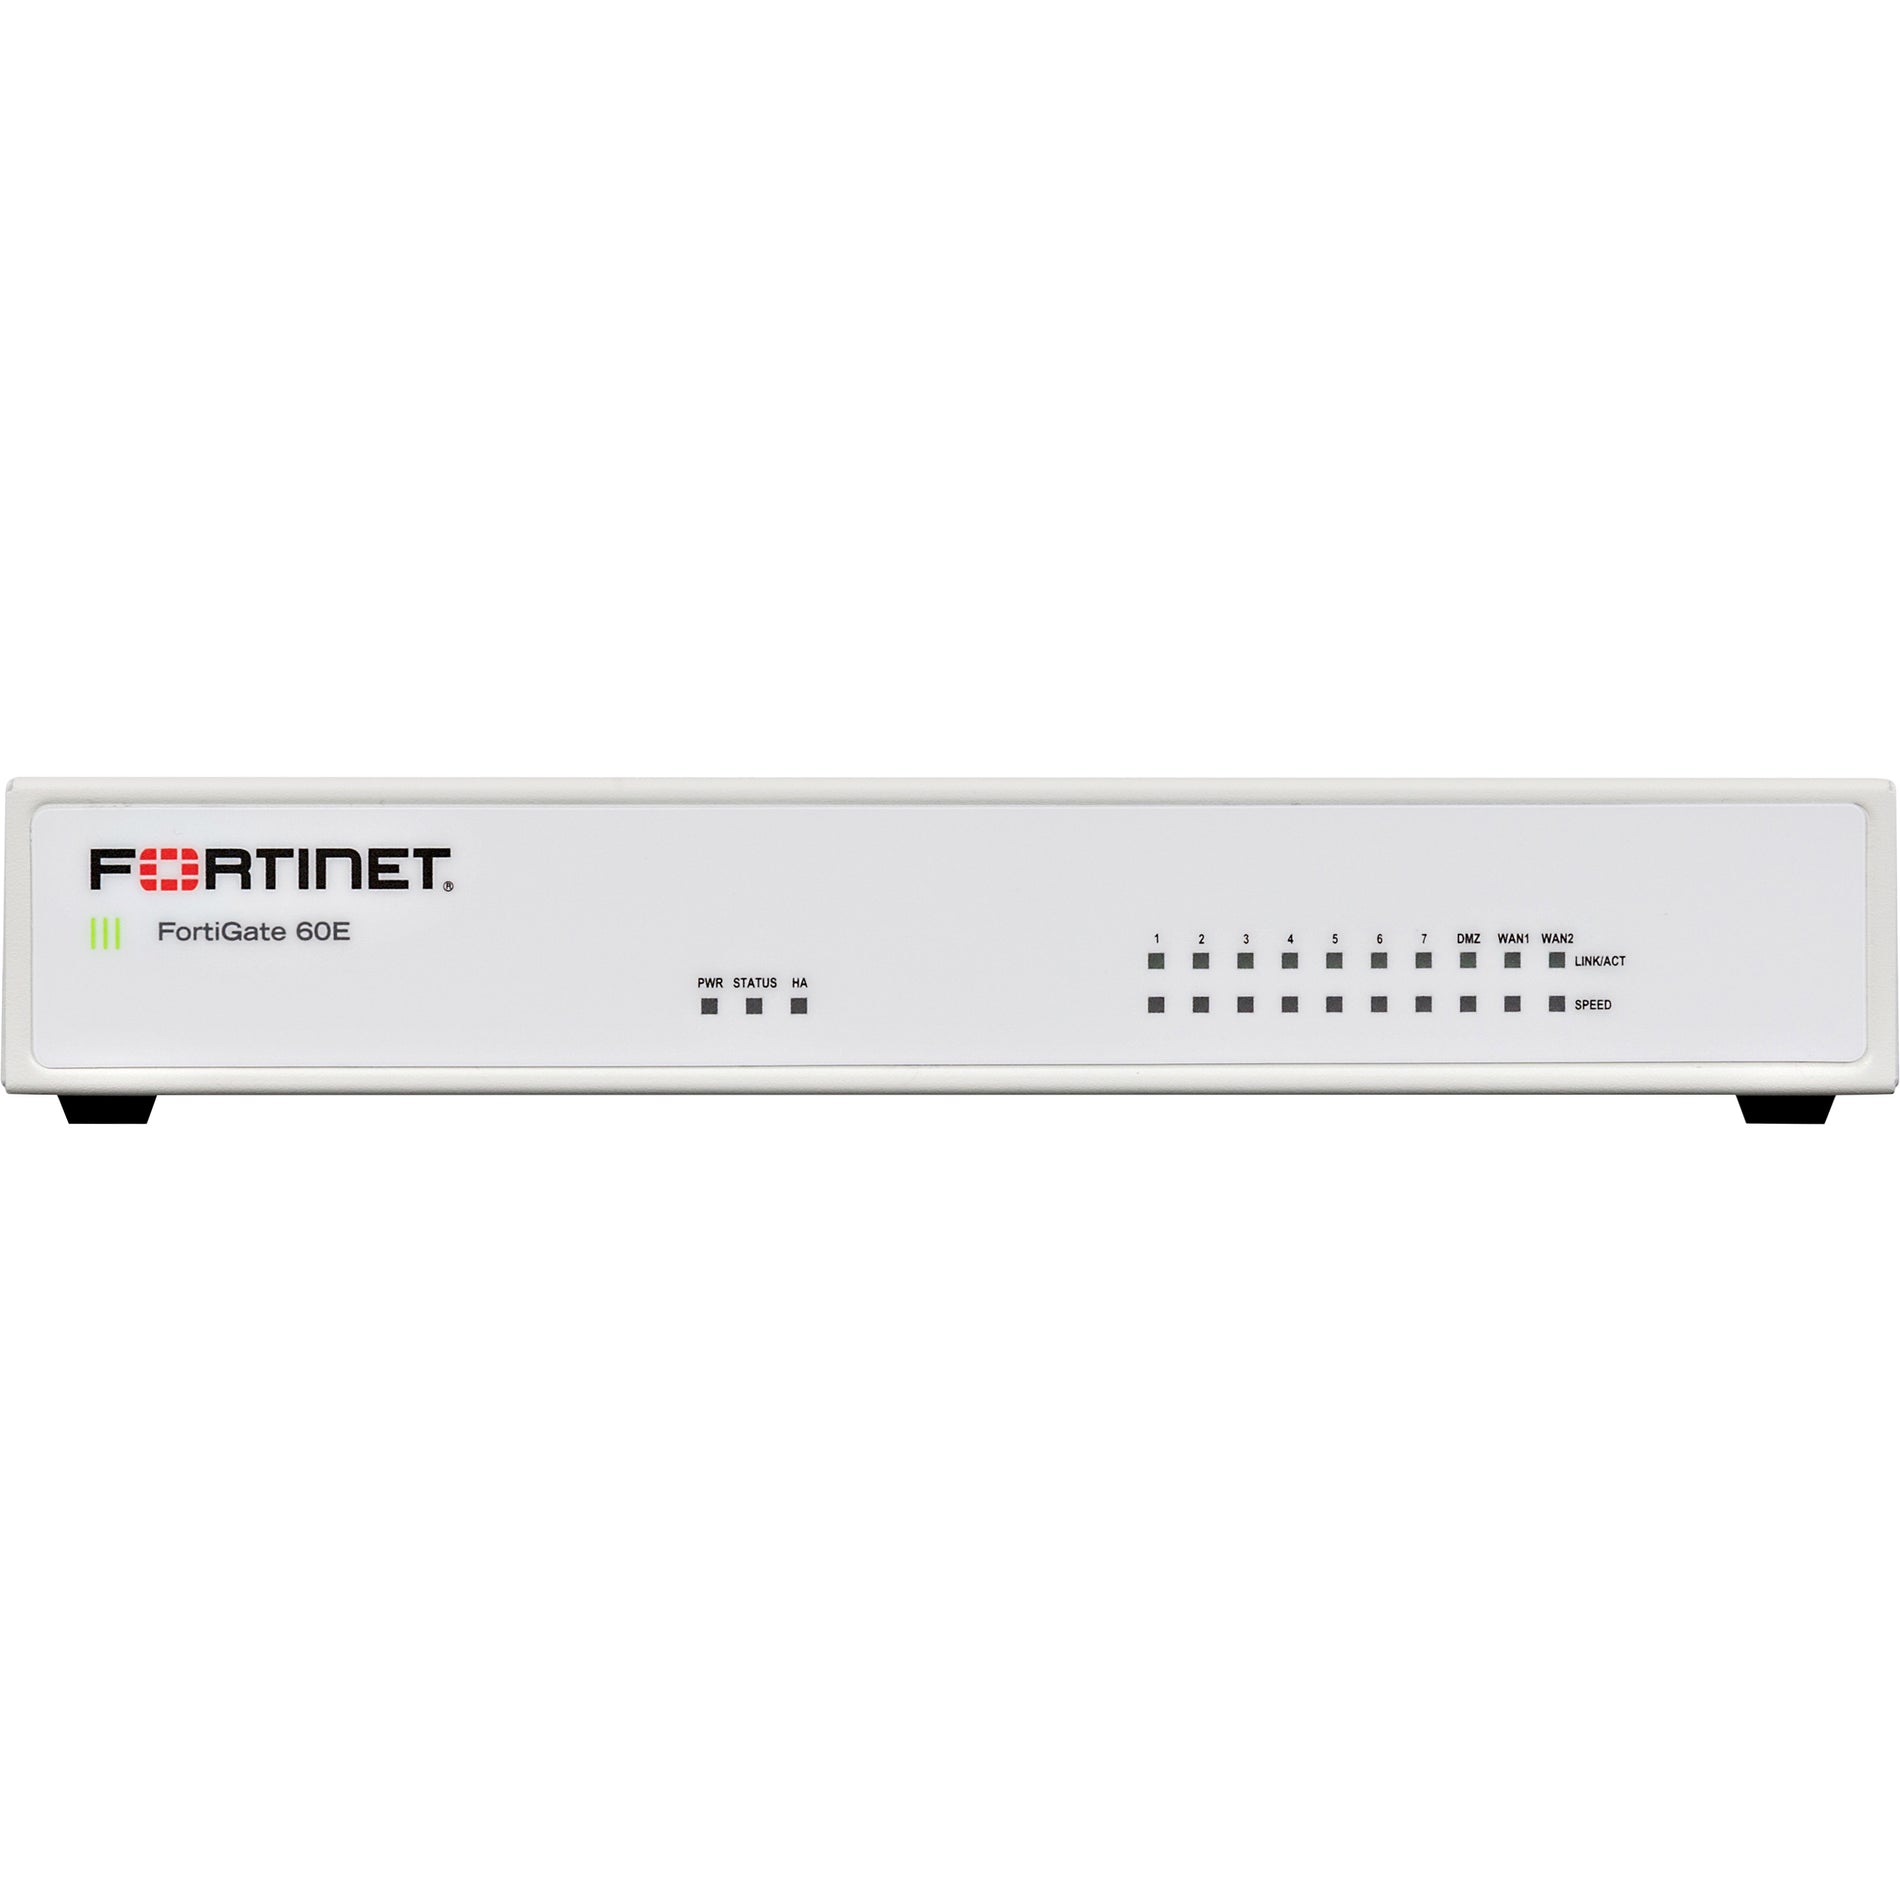 Fortinet FortiGate 60E Network Security/Firewall Appliance (FG-60E)